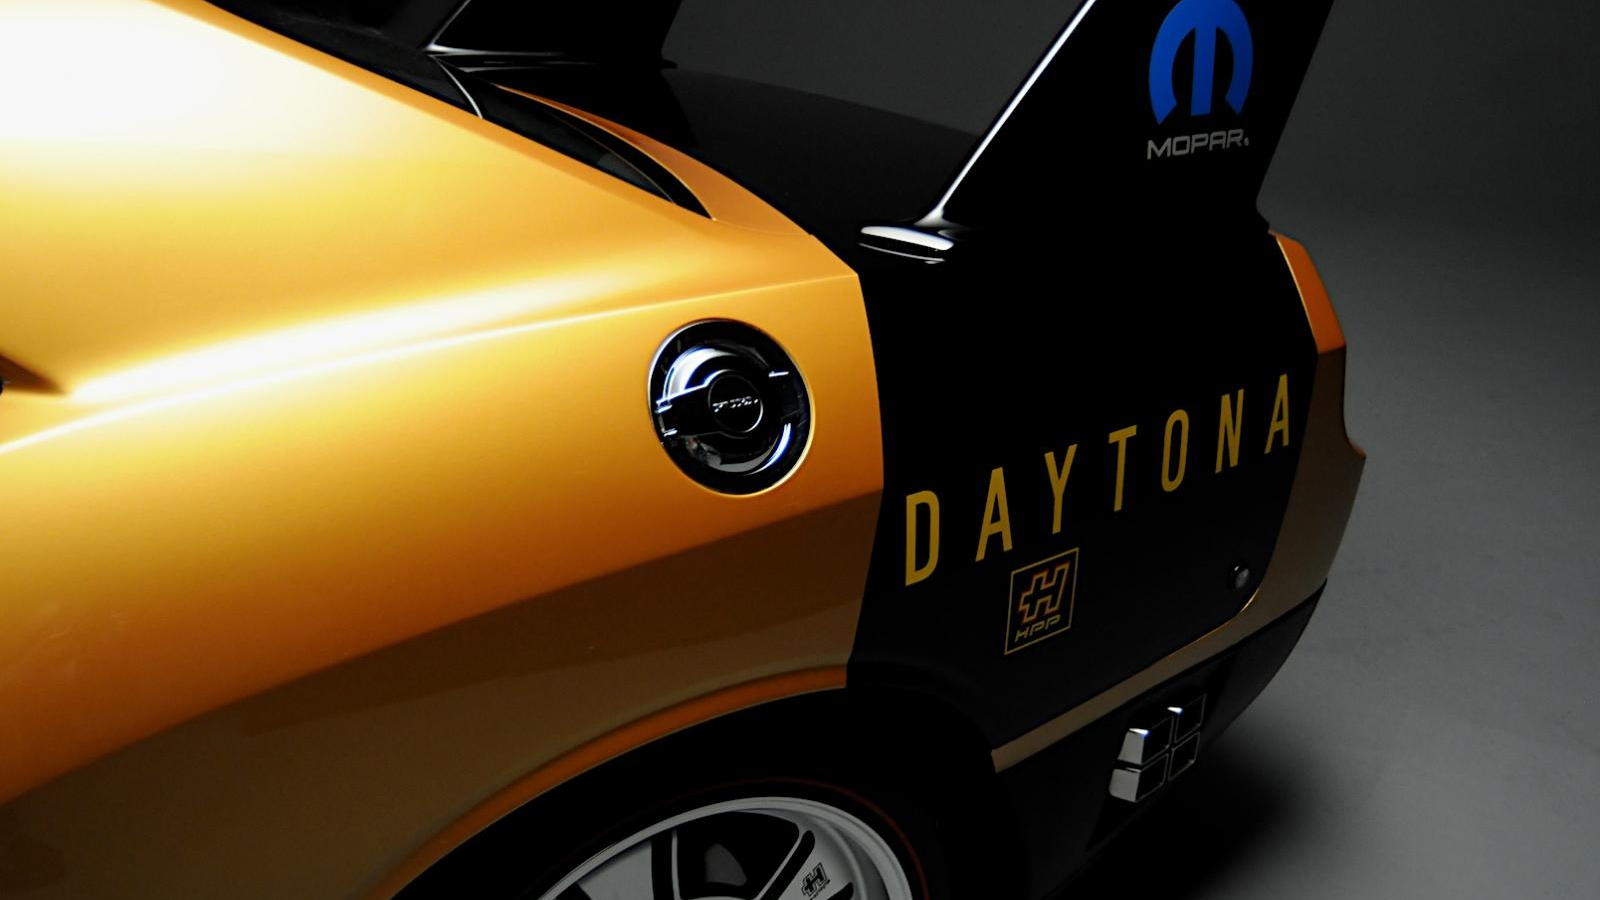 Dodge Daytona and Plymouth Superbird kits from HPP